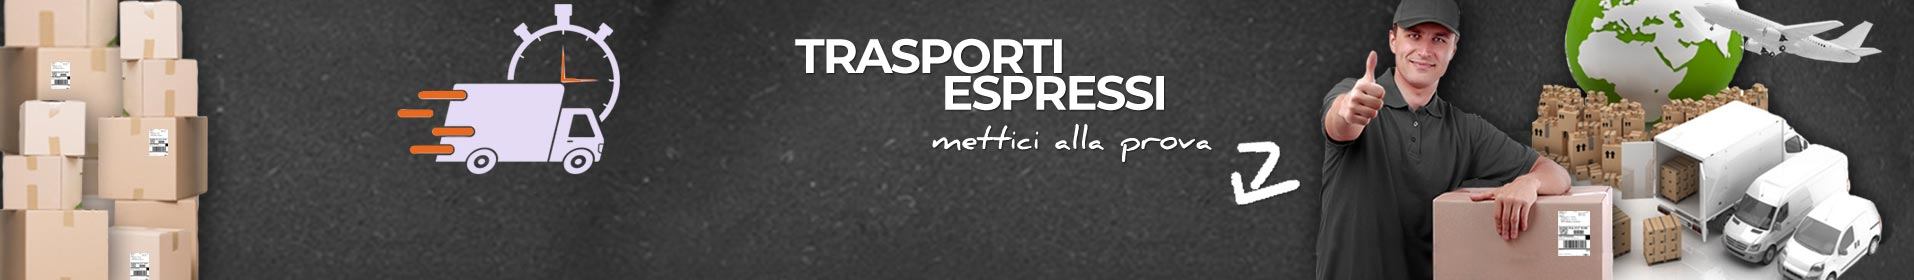 banner trasporti espressi